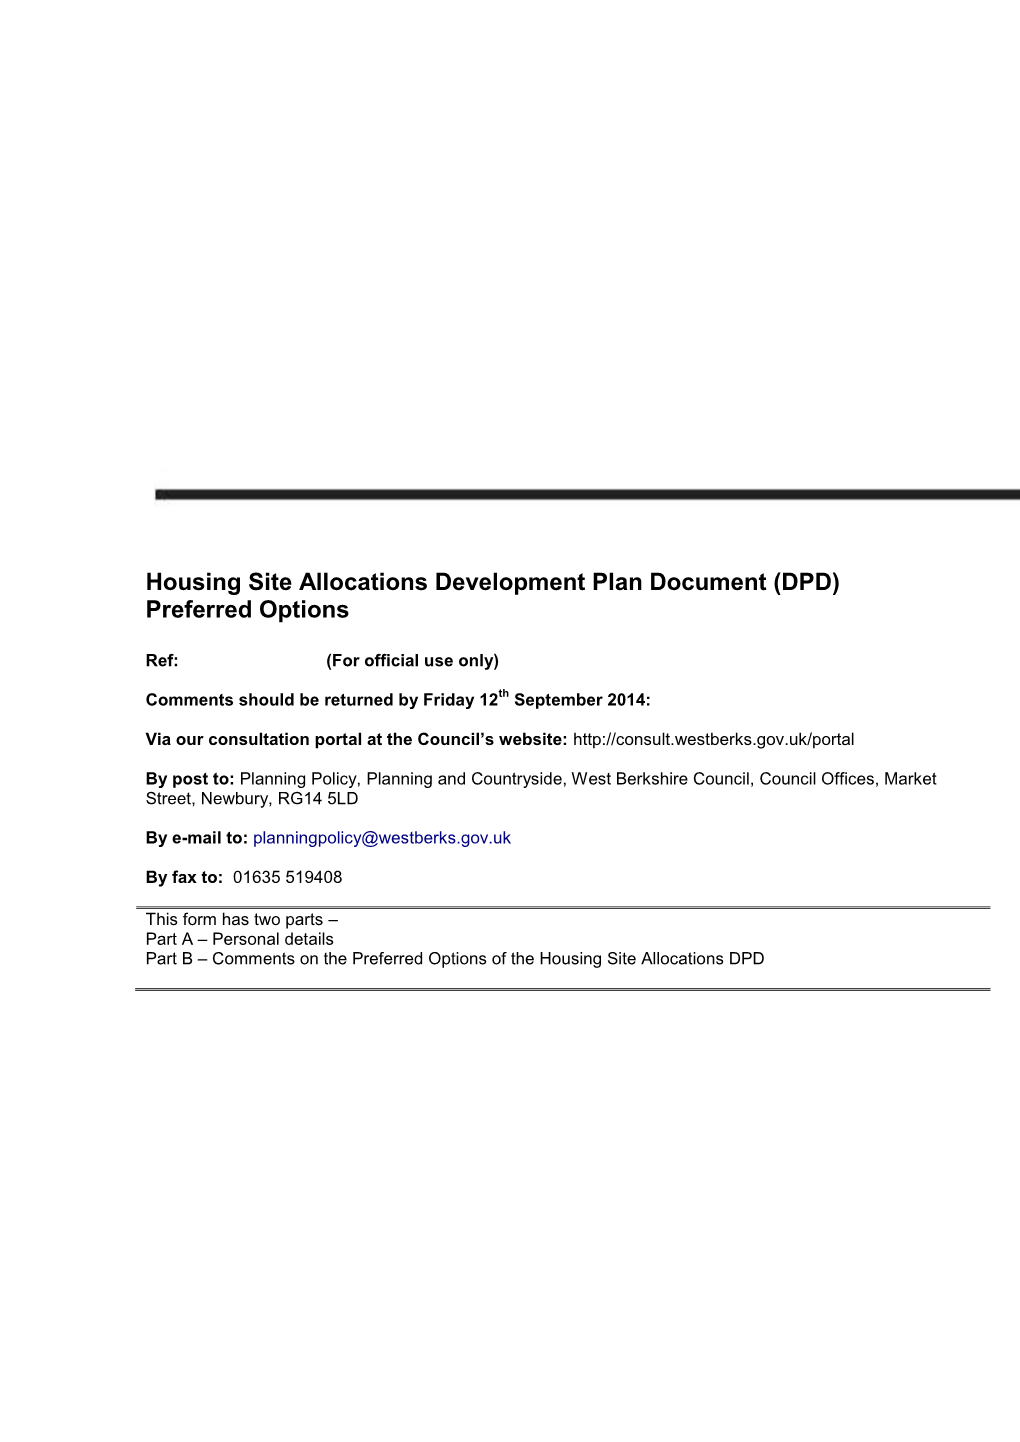 Housing Site Allocations Development Plan Document (DPD) Preferred Options